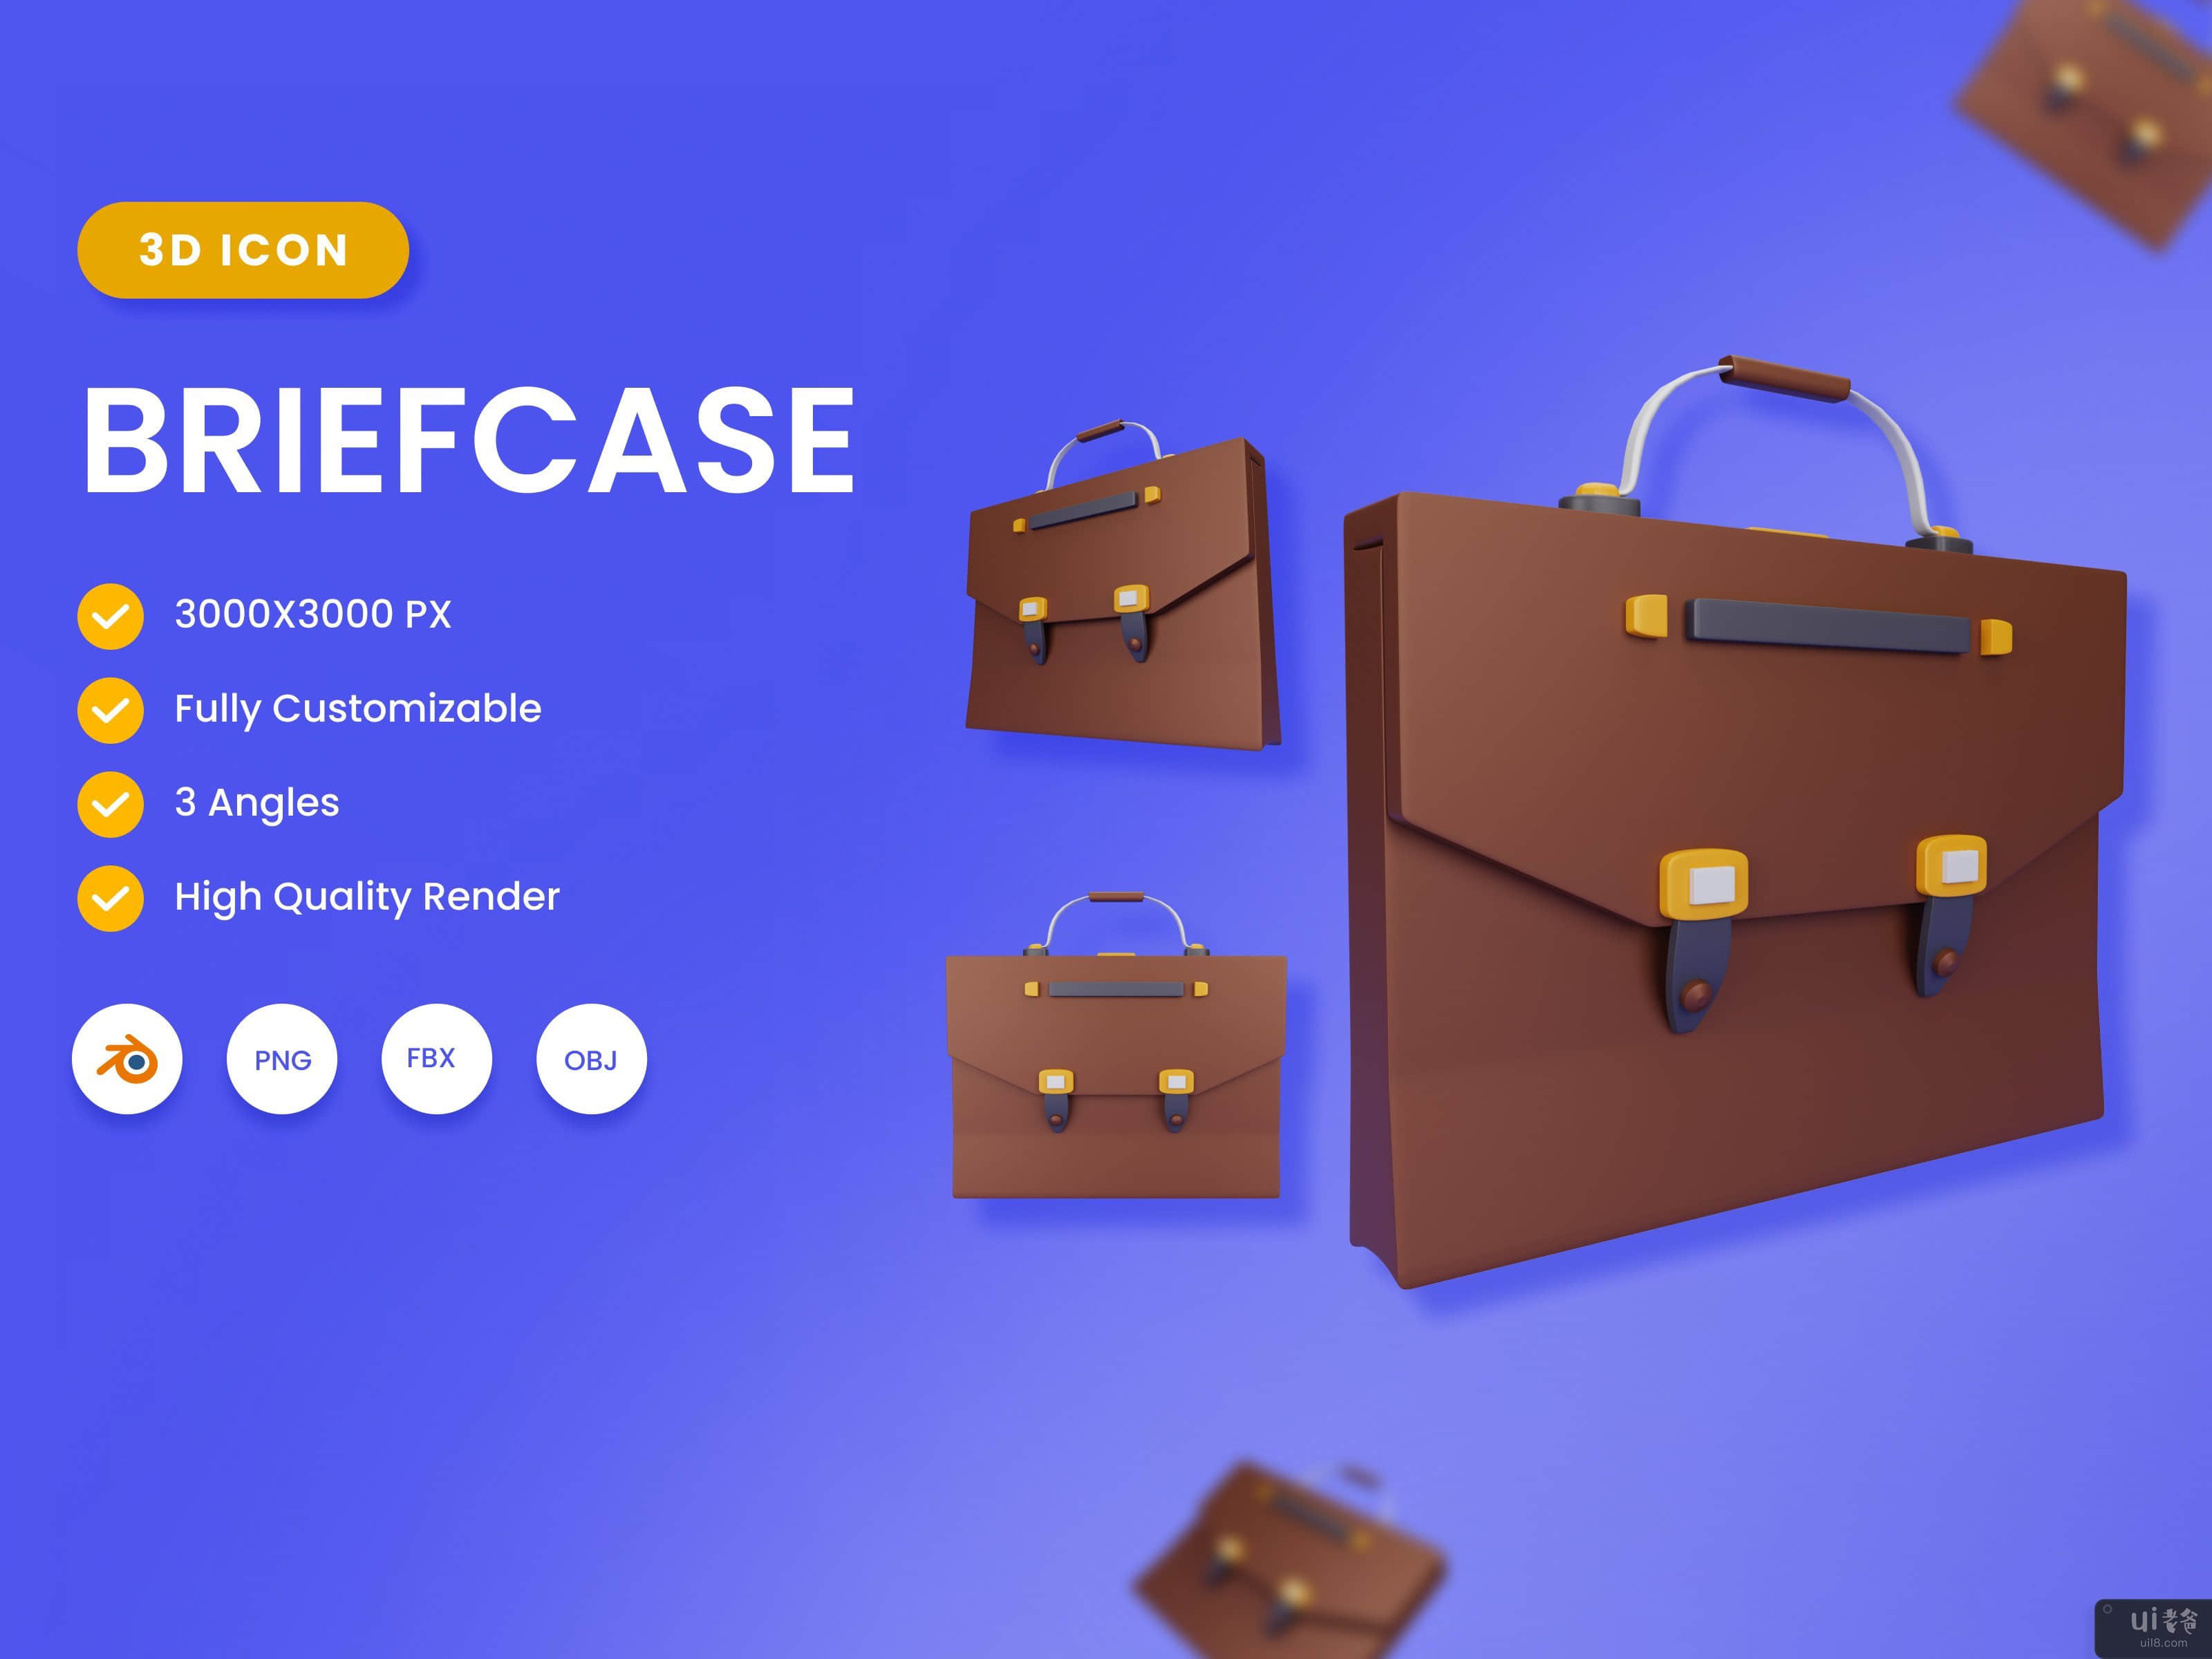 3D 公文包插图(3D Briefcase illustration)插图2